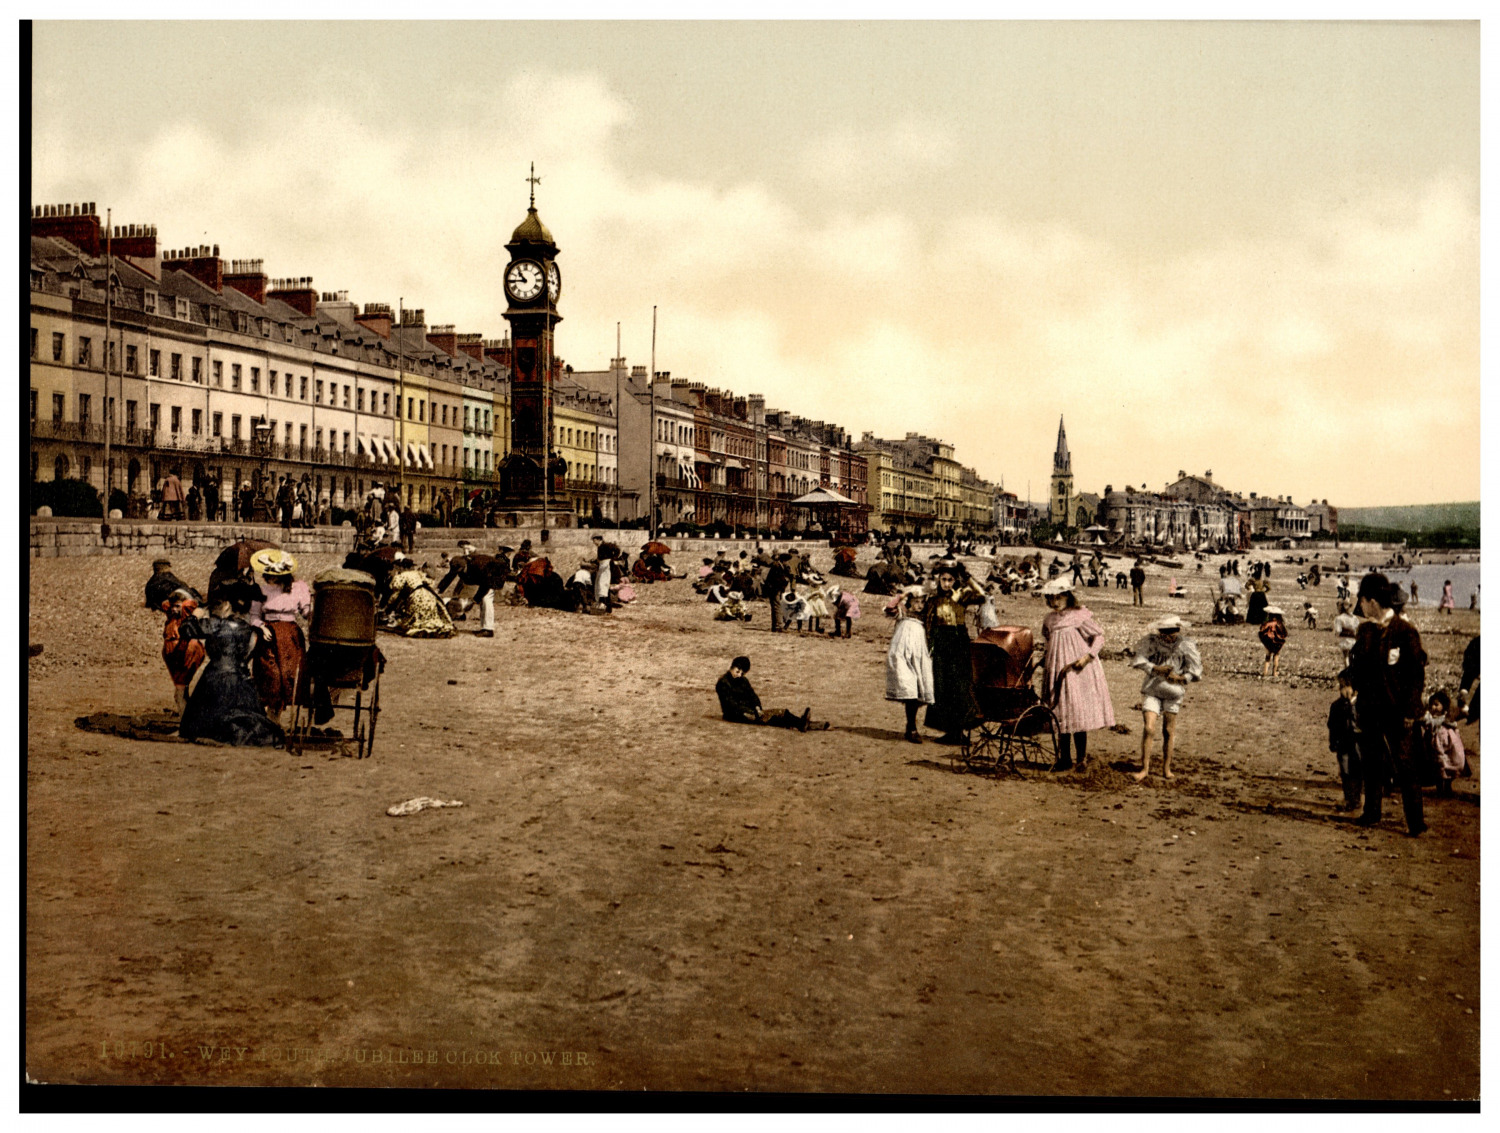 England. Weymouth. Jubilee Clock Tower. Vintage Photochrome by P.Z, Photochrome